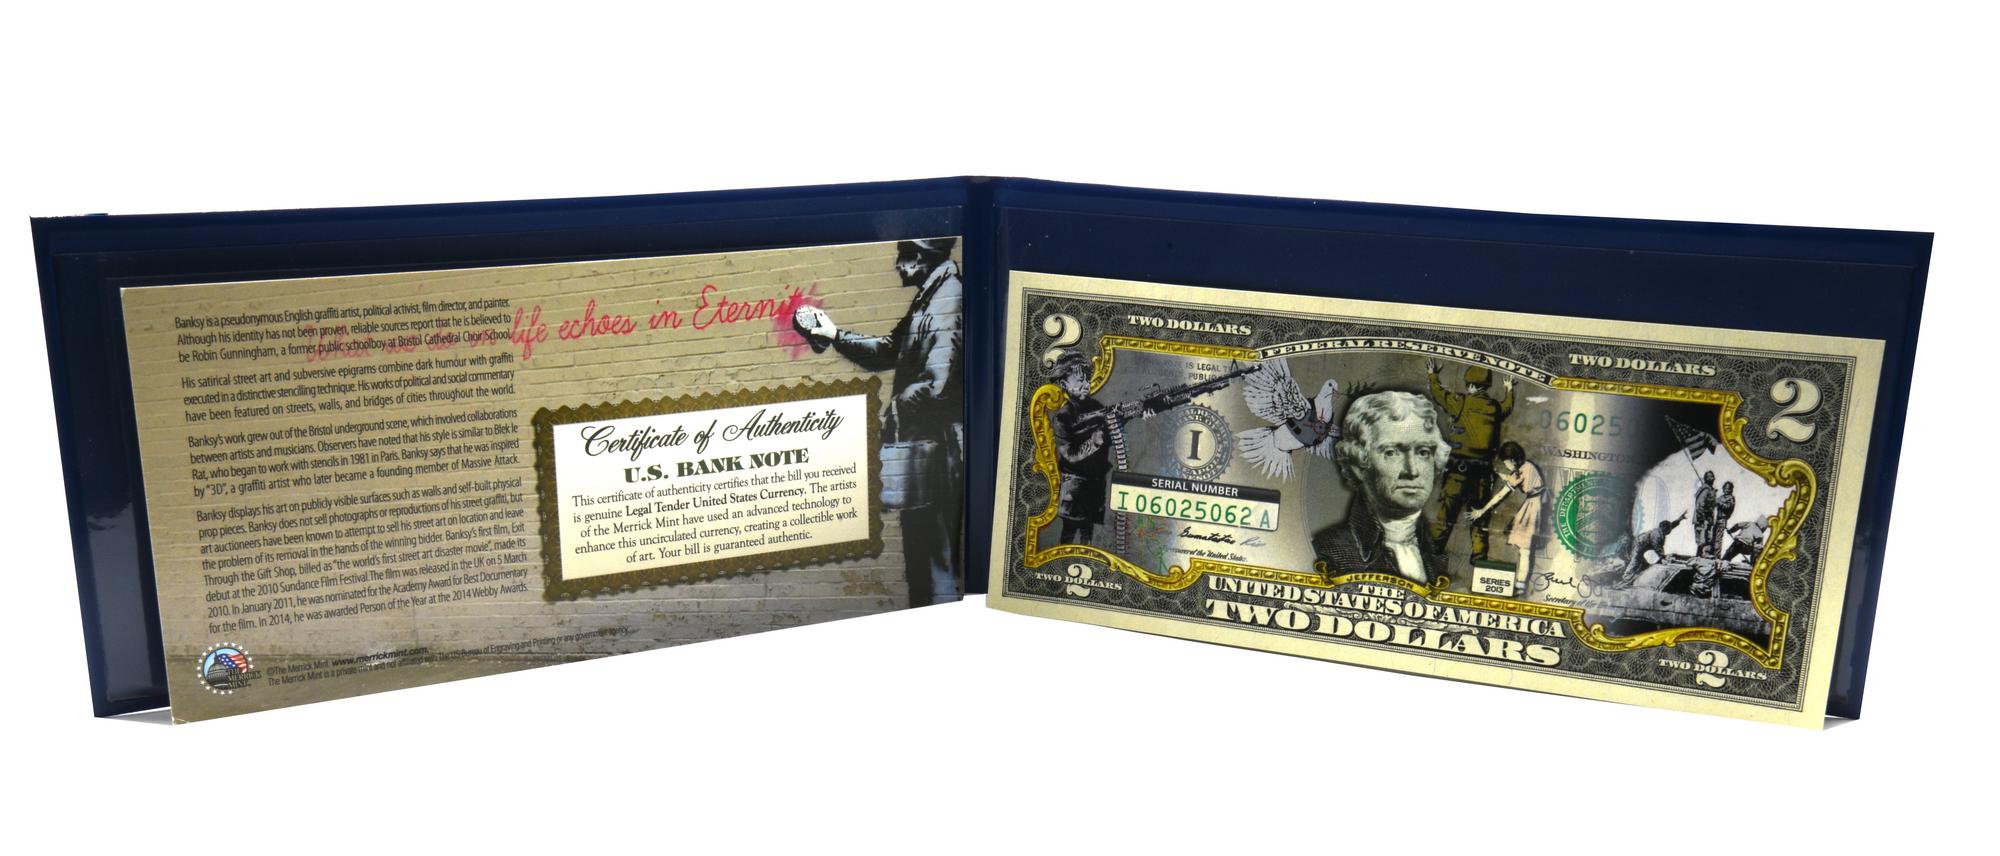 Merrick Mint BANKSY ANTI-WAR stampa su banconota, cm 6,5x15,5 L'opera e'...